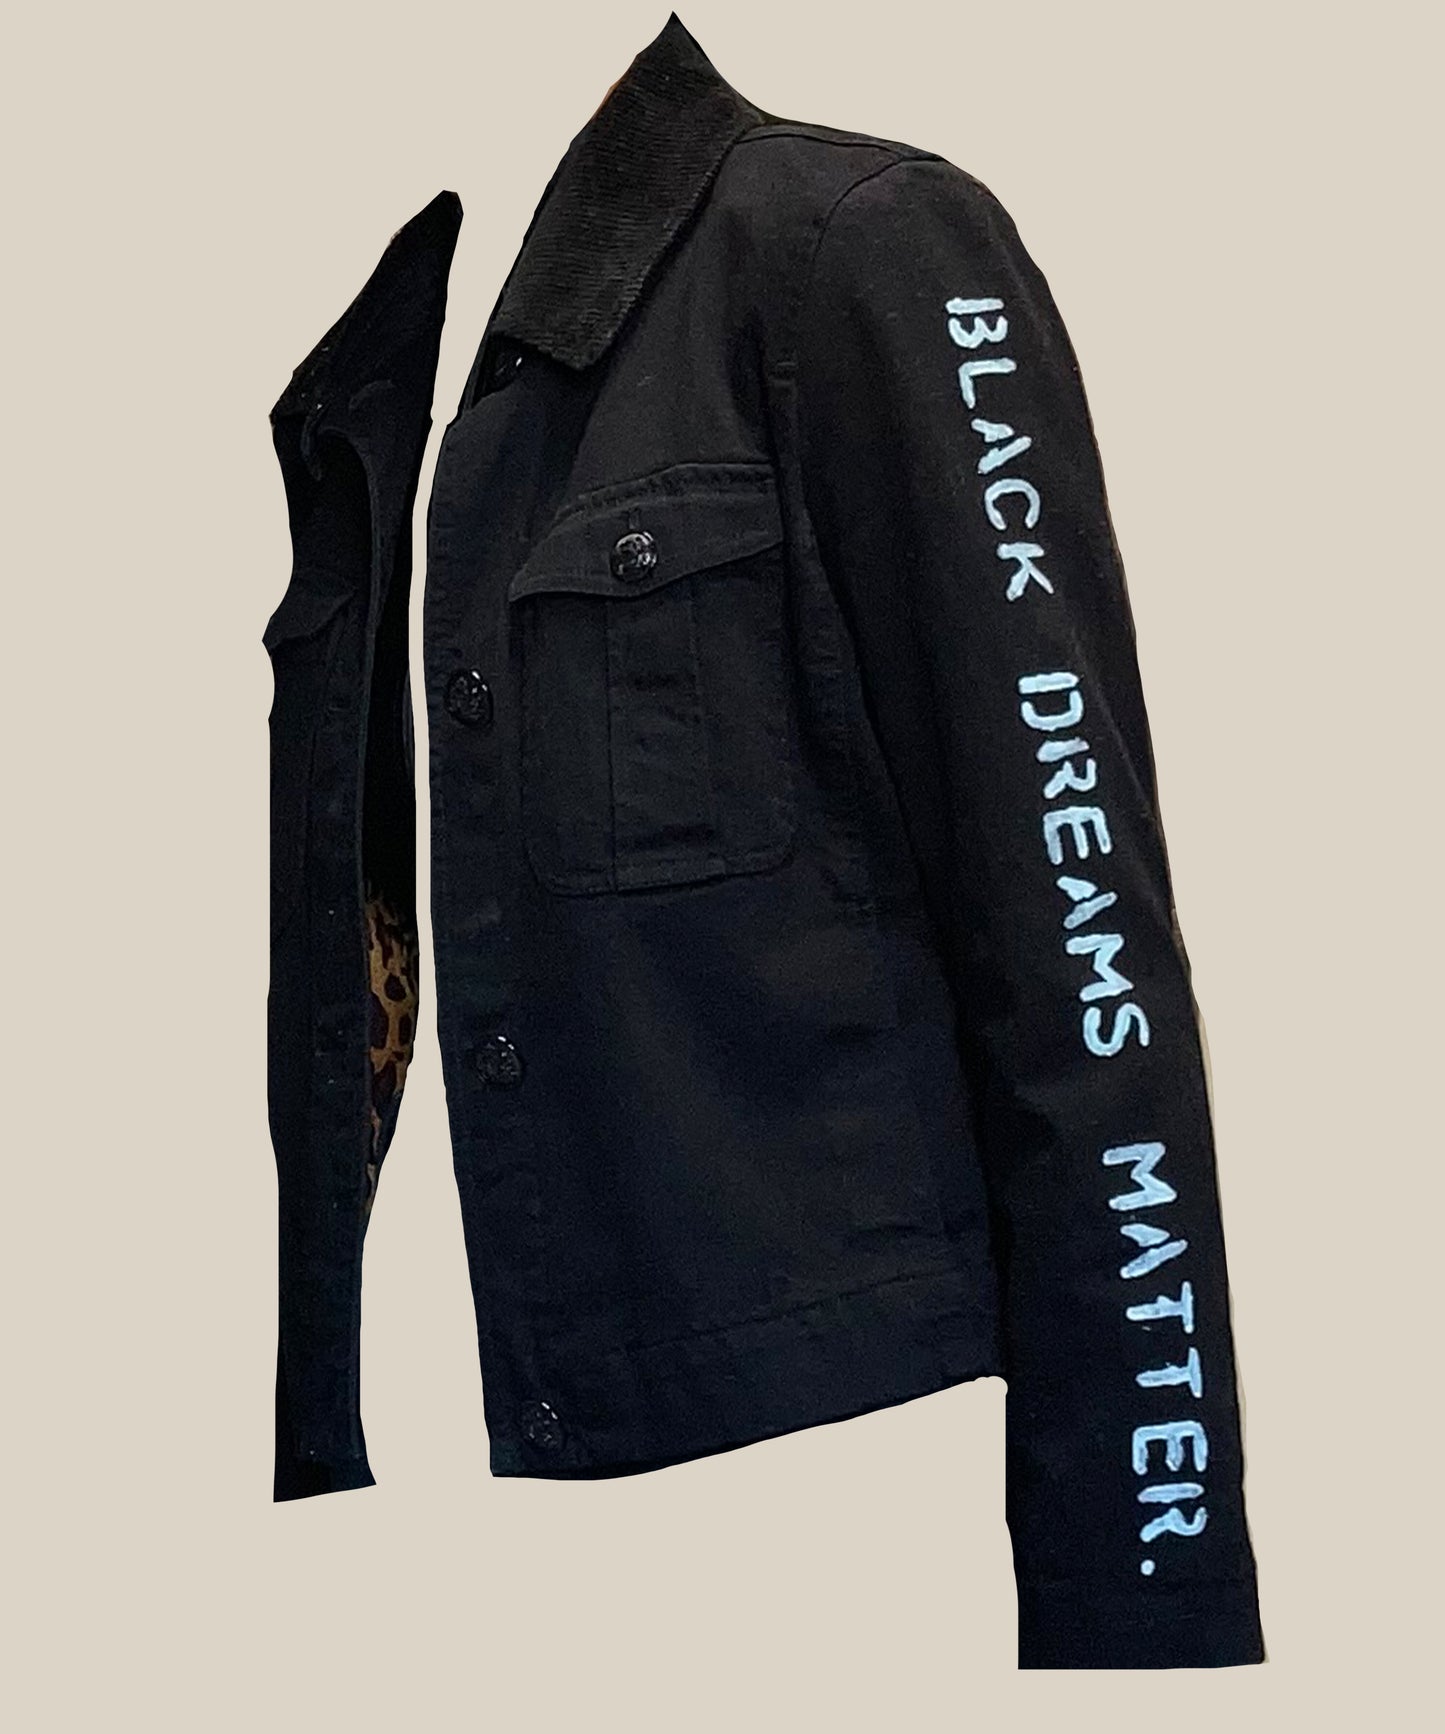 'Black Dreams Matter' Polarity Jacket